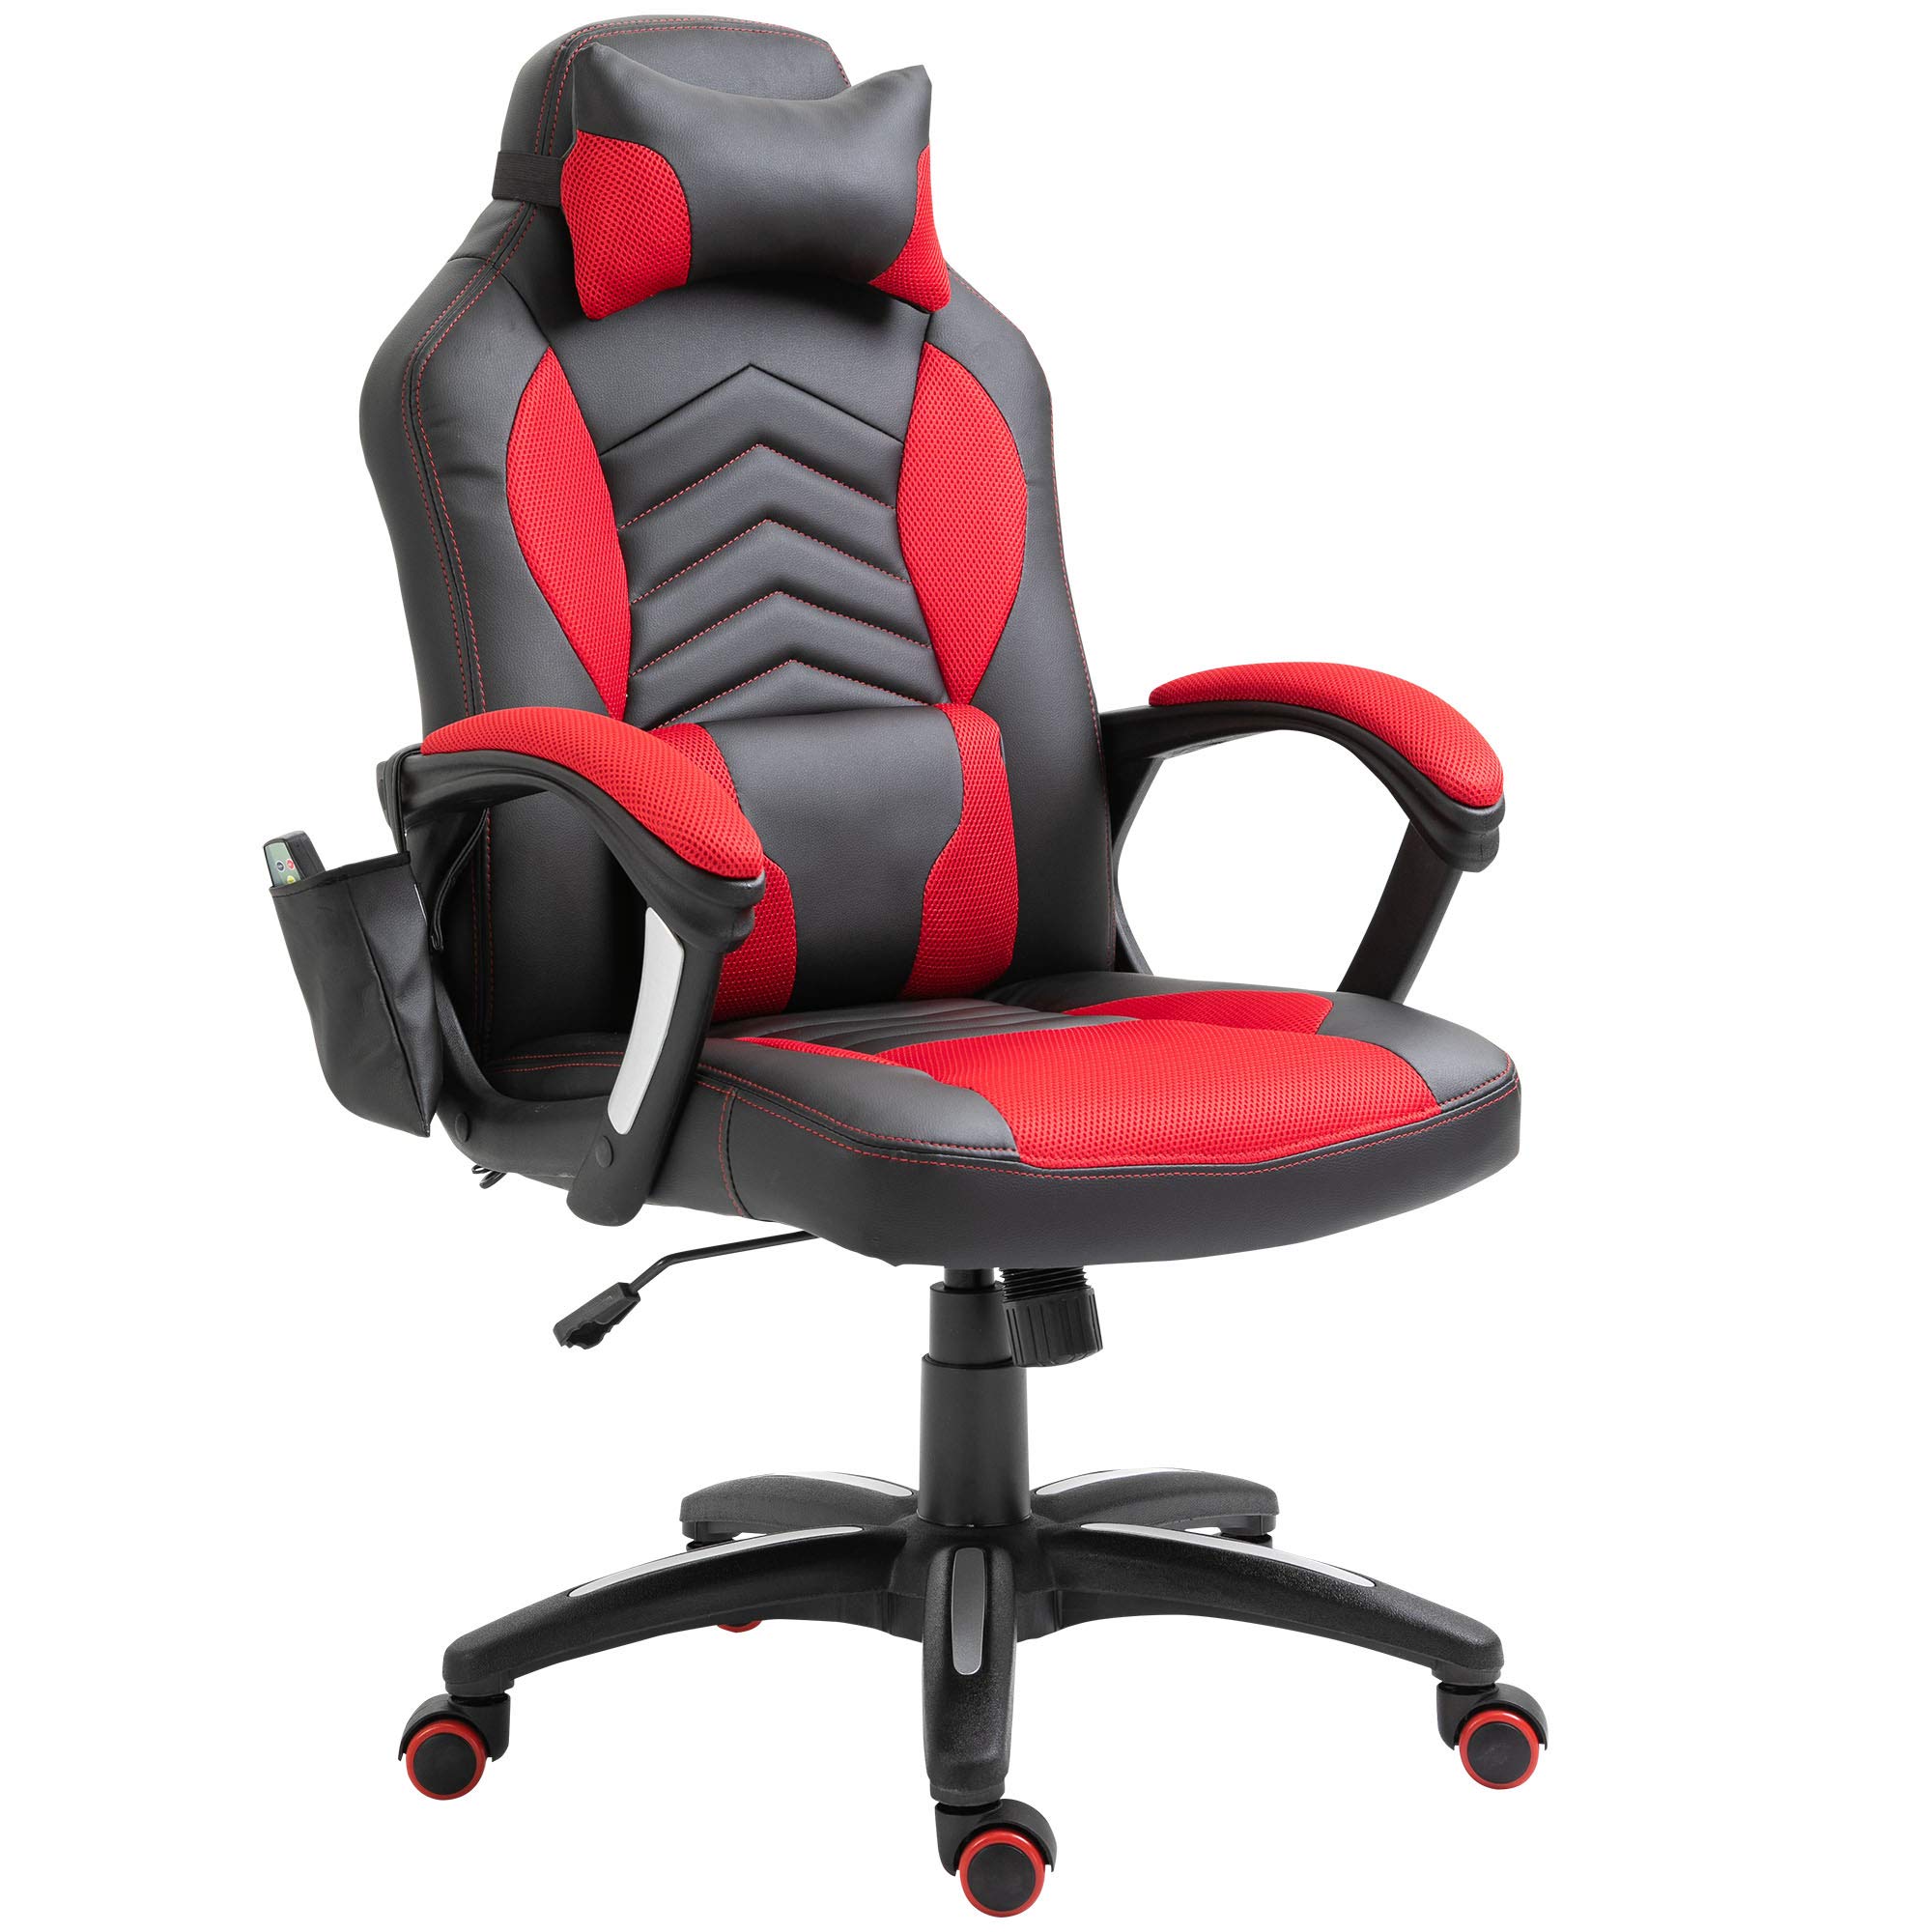 HOMCOM Bürostuhl Massagesessel Massagefunktion mit 6 Vibrationspunkte Ergonomischer Gaming Stuhl mit Wärmefunktion Kunstleder Rot 68 x 69 x 108-117cm